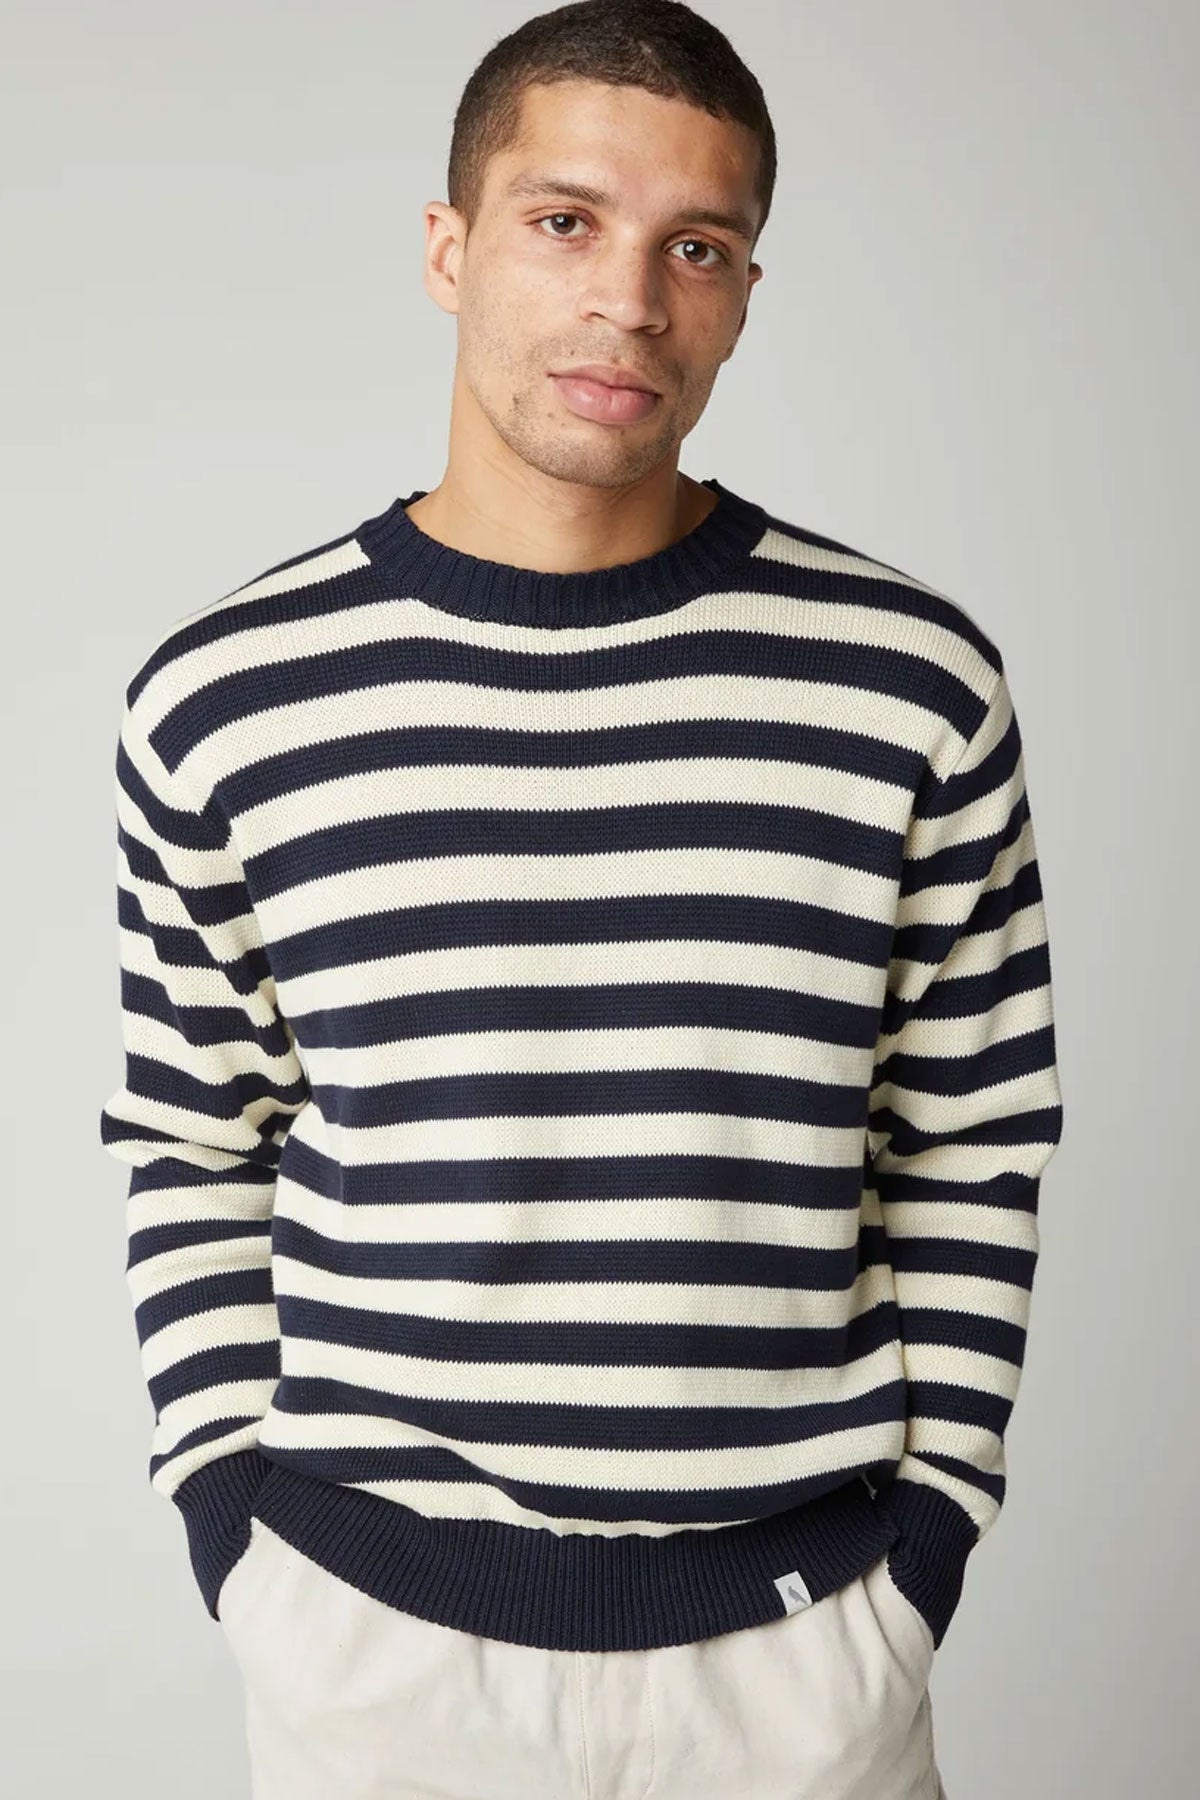 Peregrine - Richmond Sweater in Navy